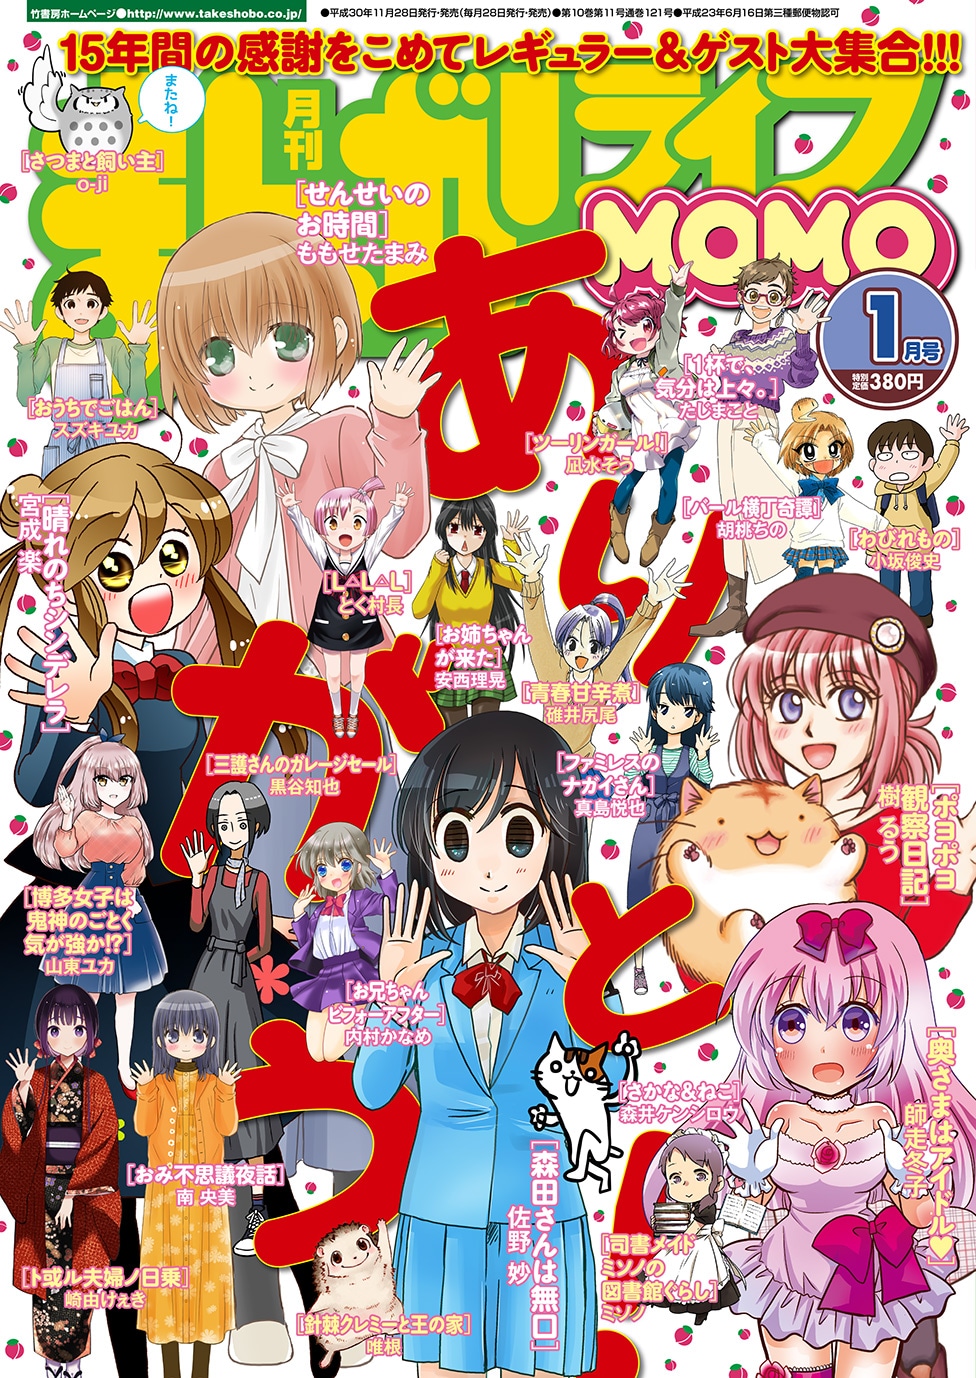 Manga Life MOMO201901.jpg